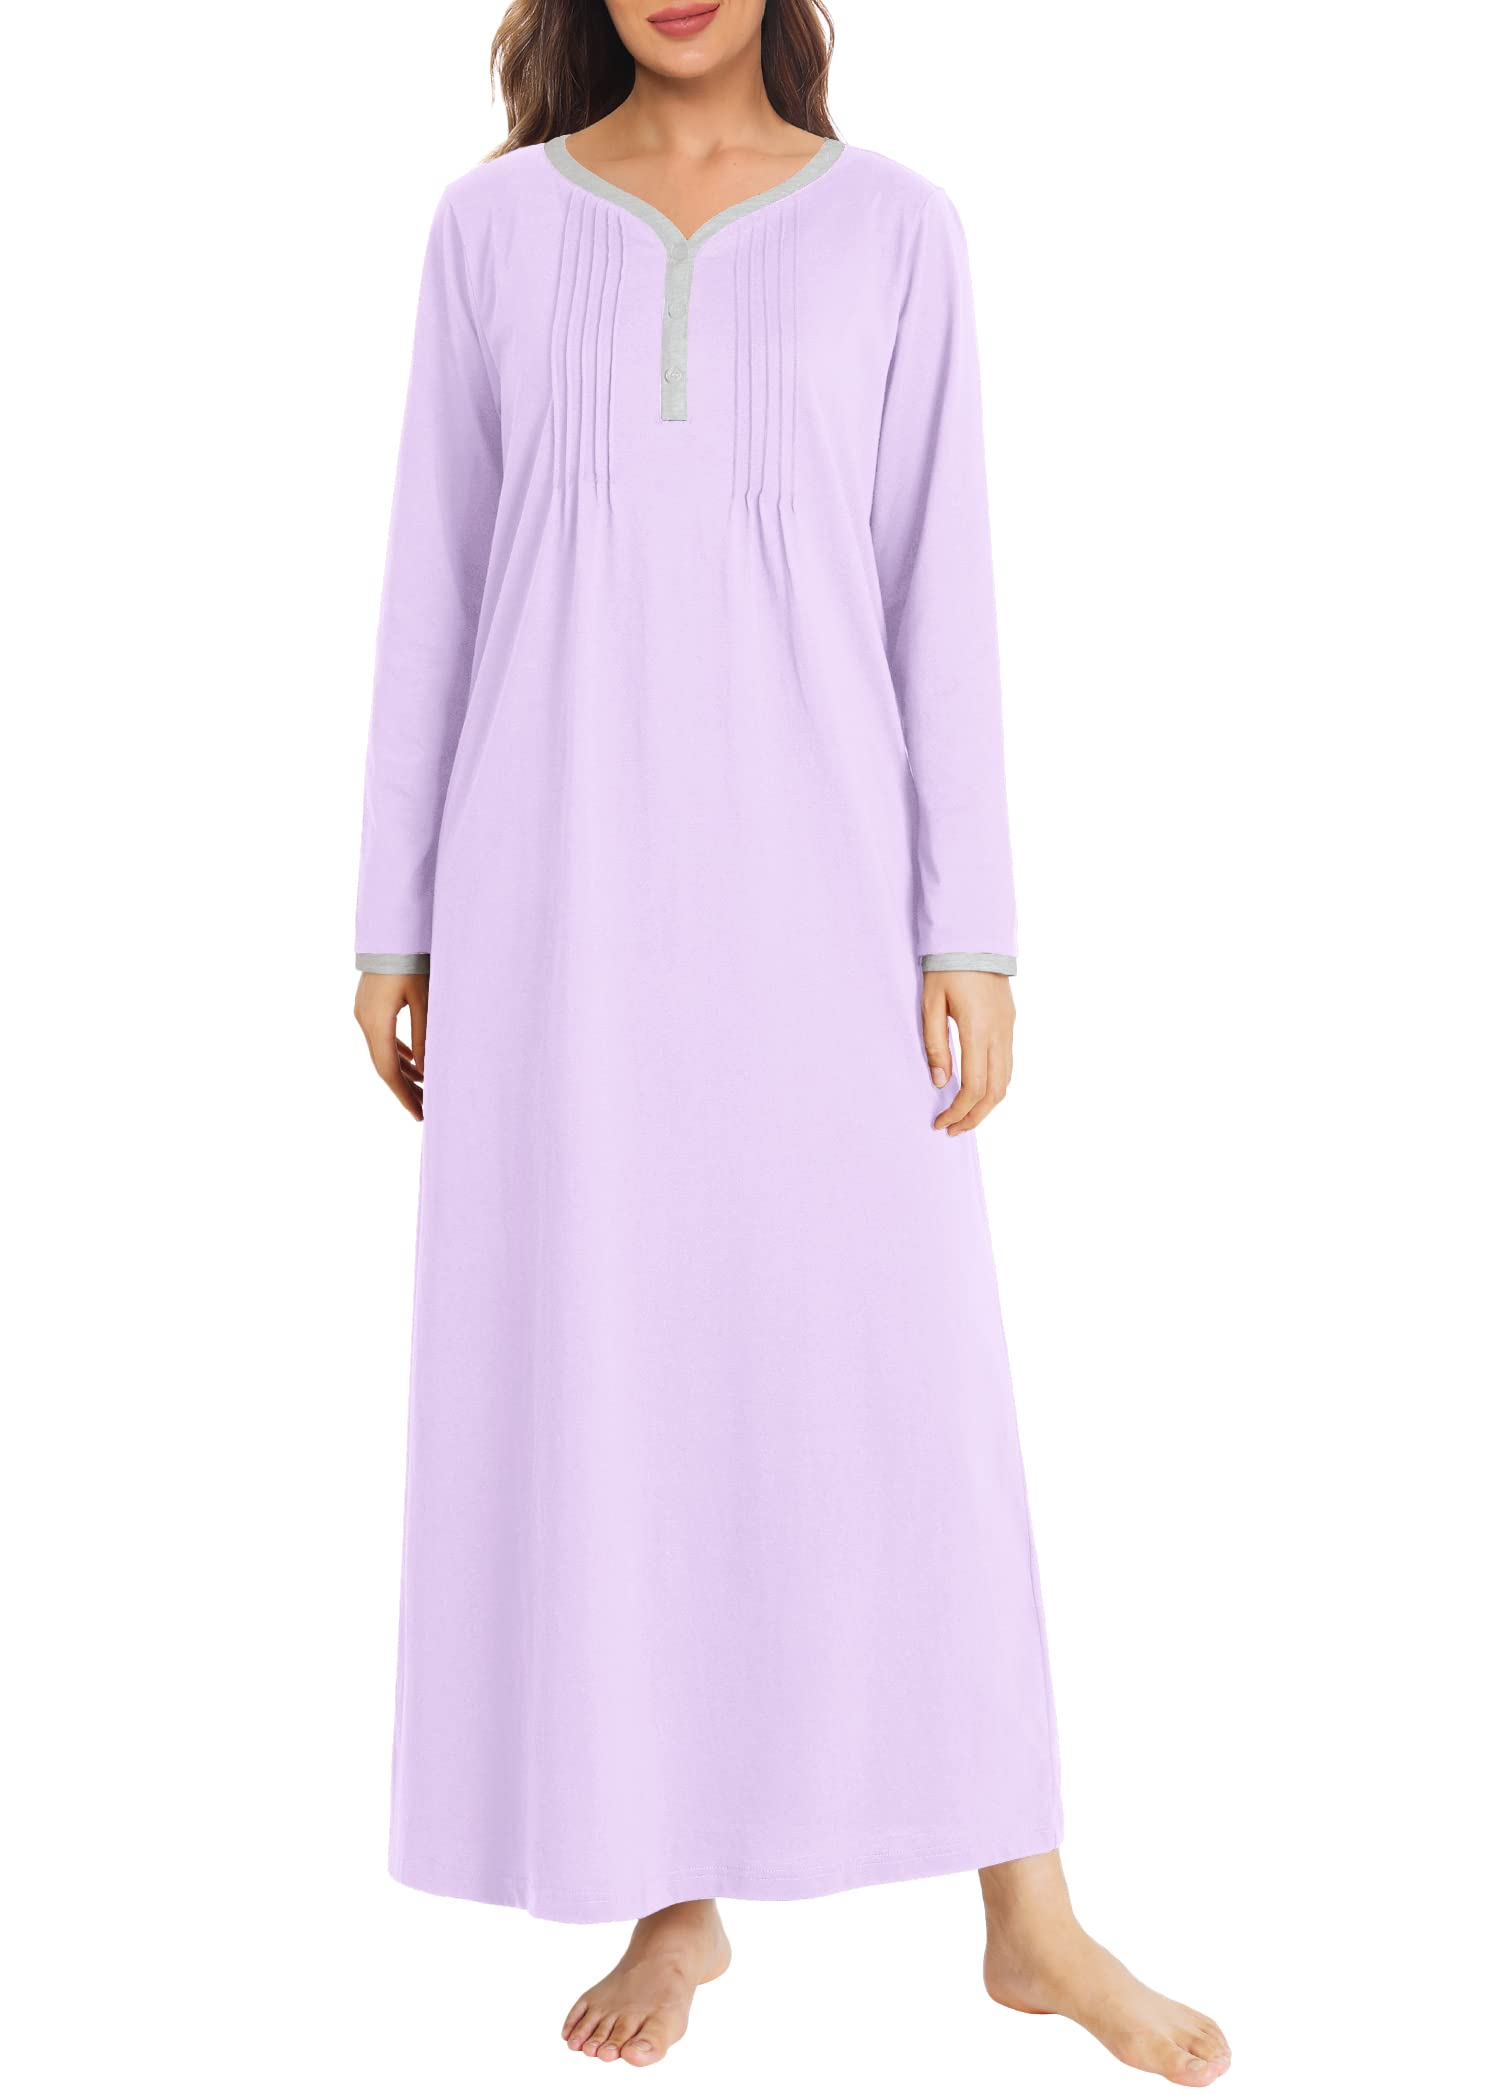 Women's Long Sleeve Nightgown Cotton Sleeping Gown – Latuza